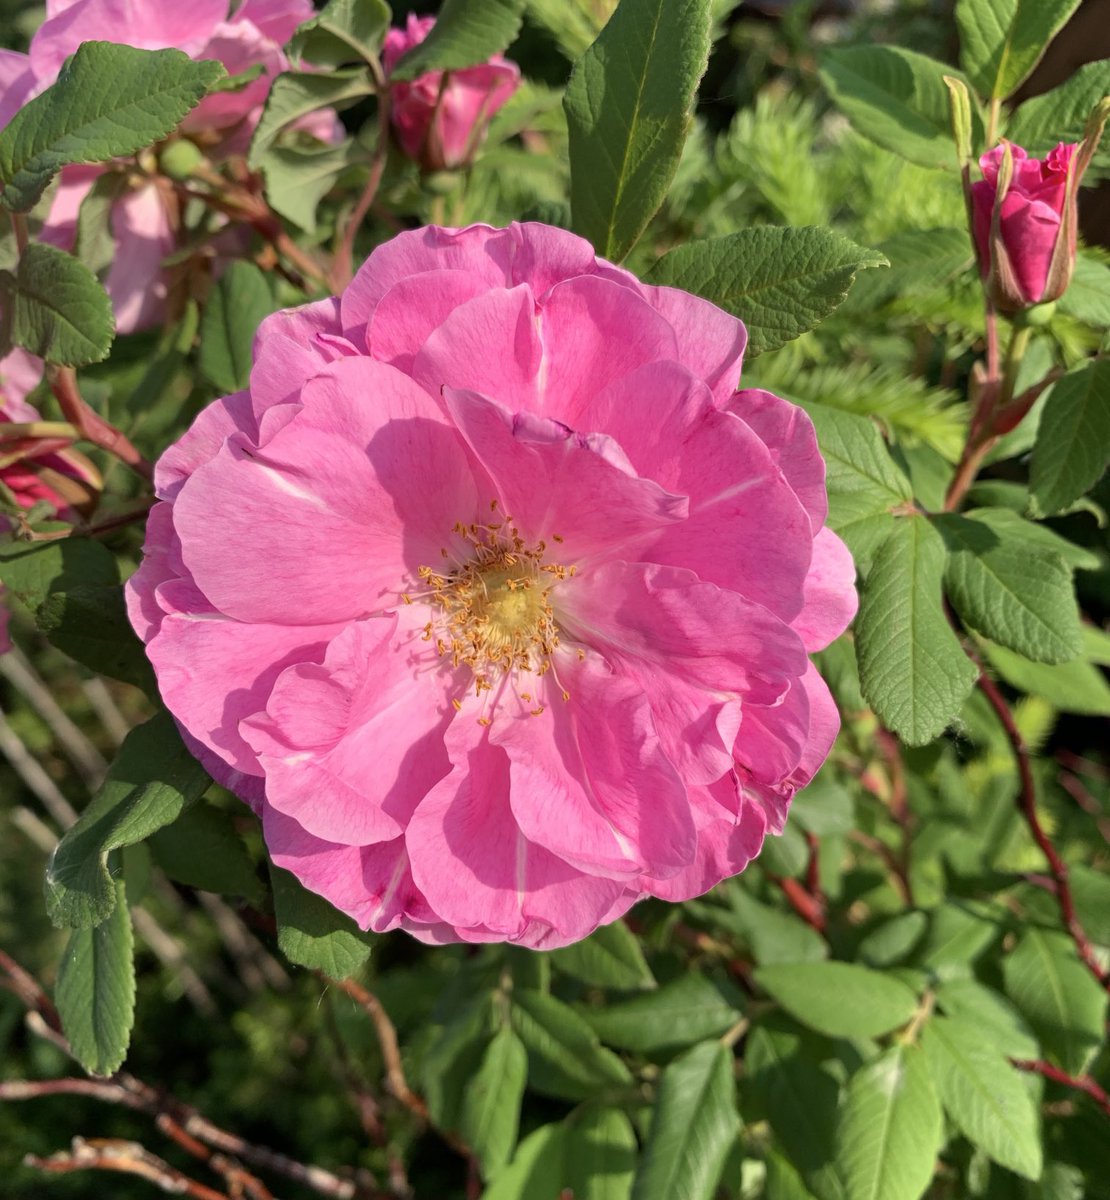 Symbol of Alberta the Wild Rose 😊 Happy #RoseWednesday